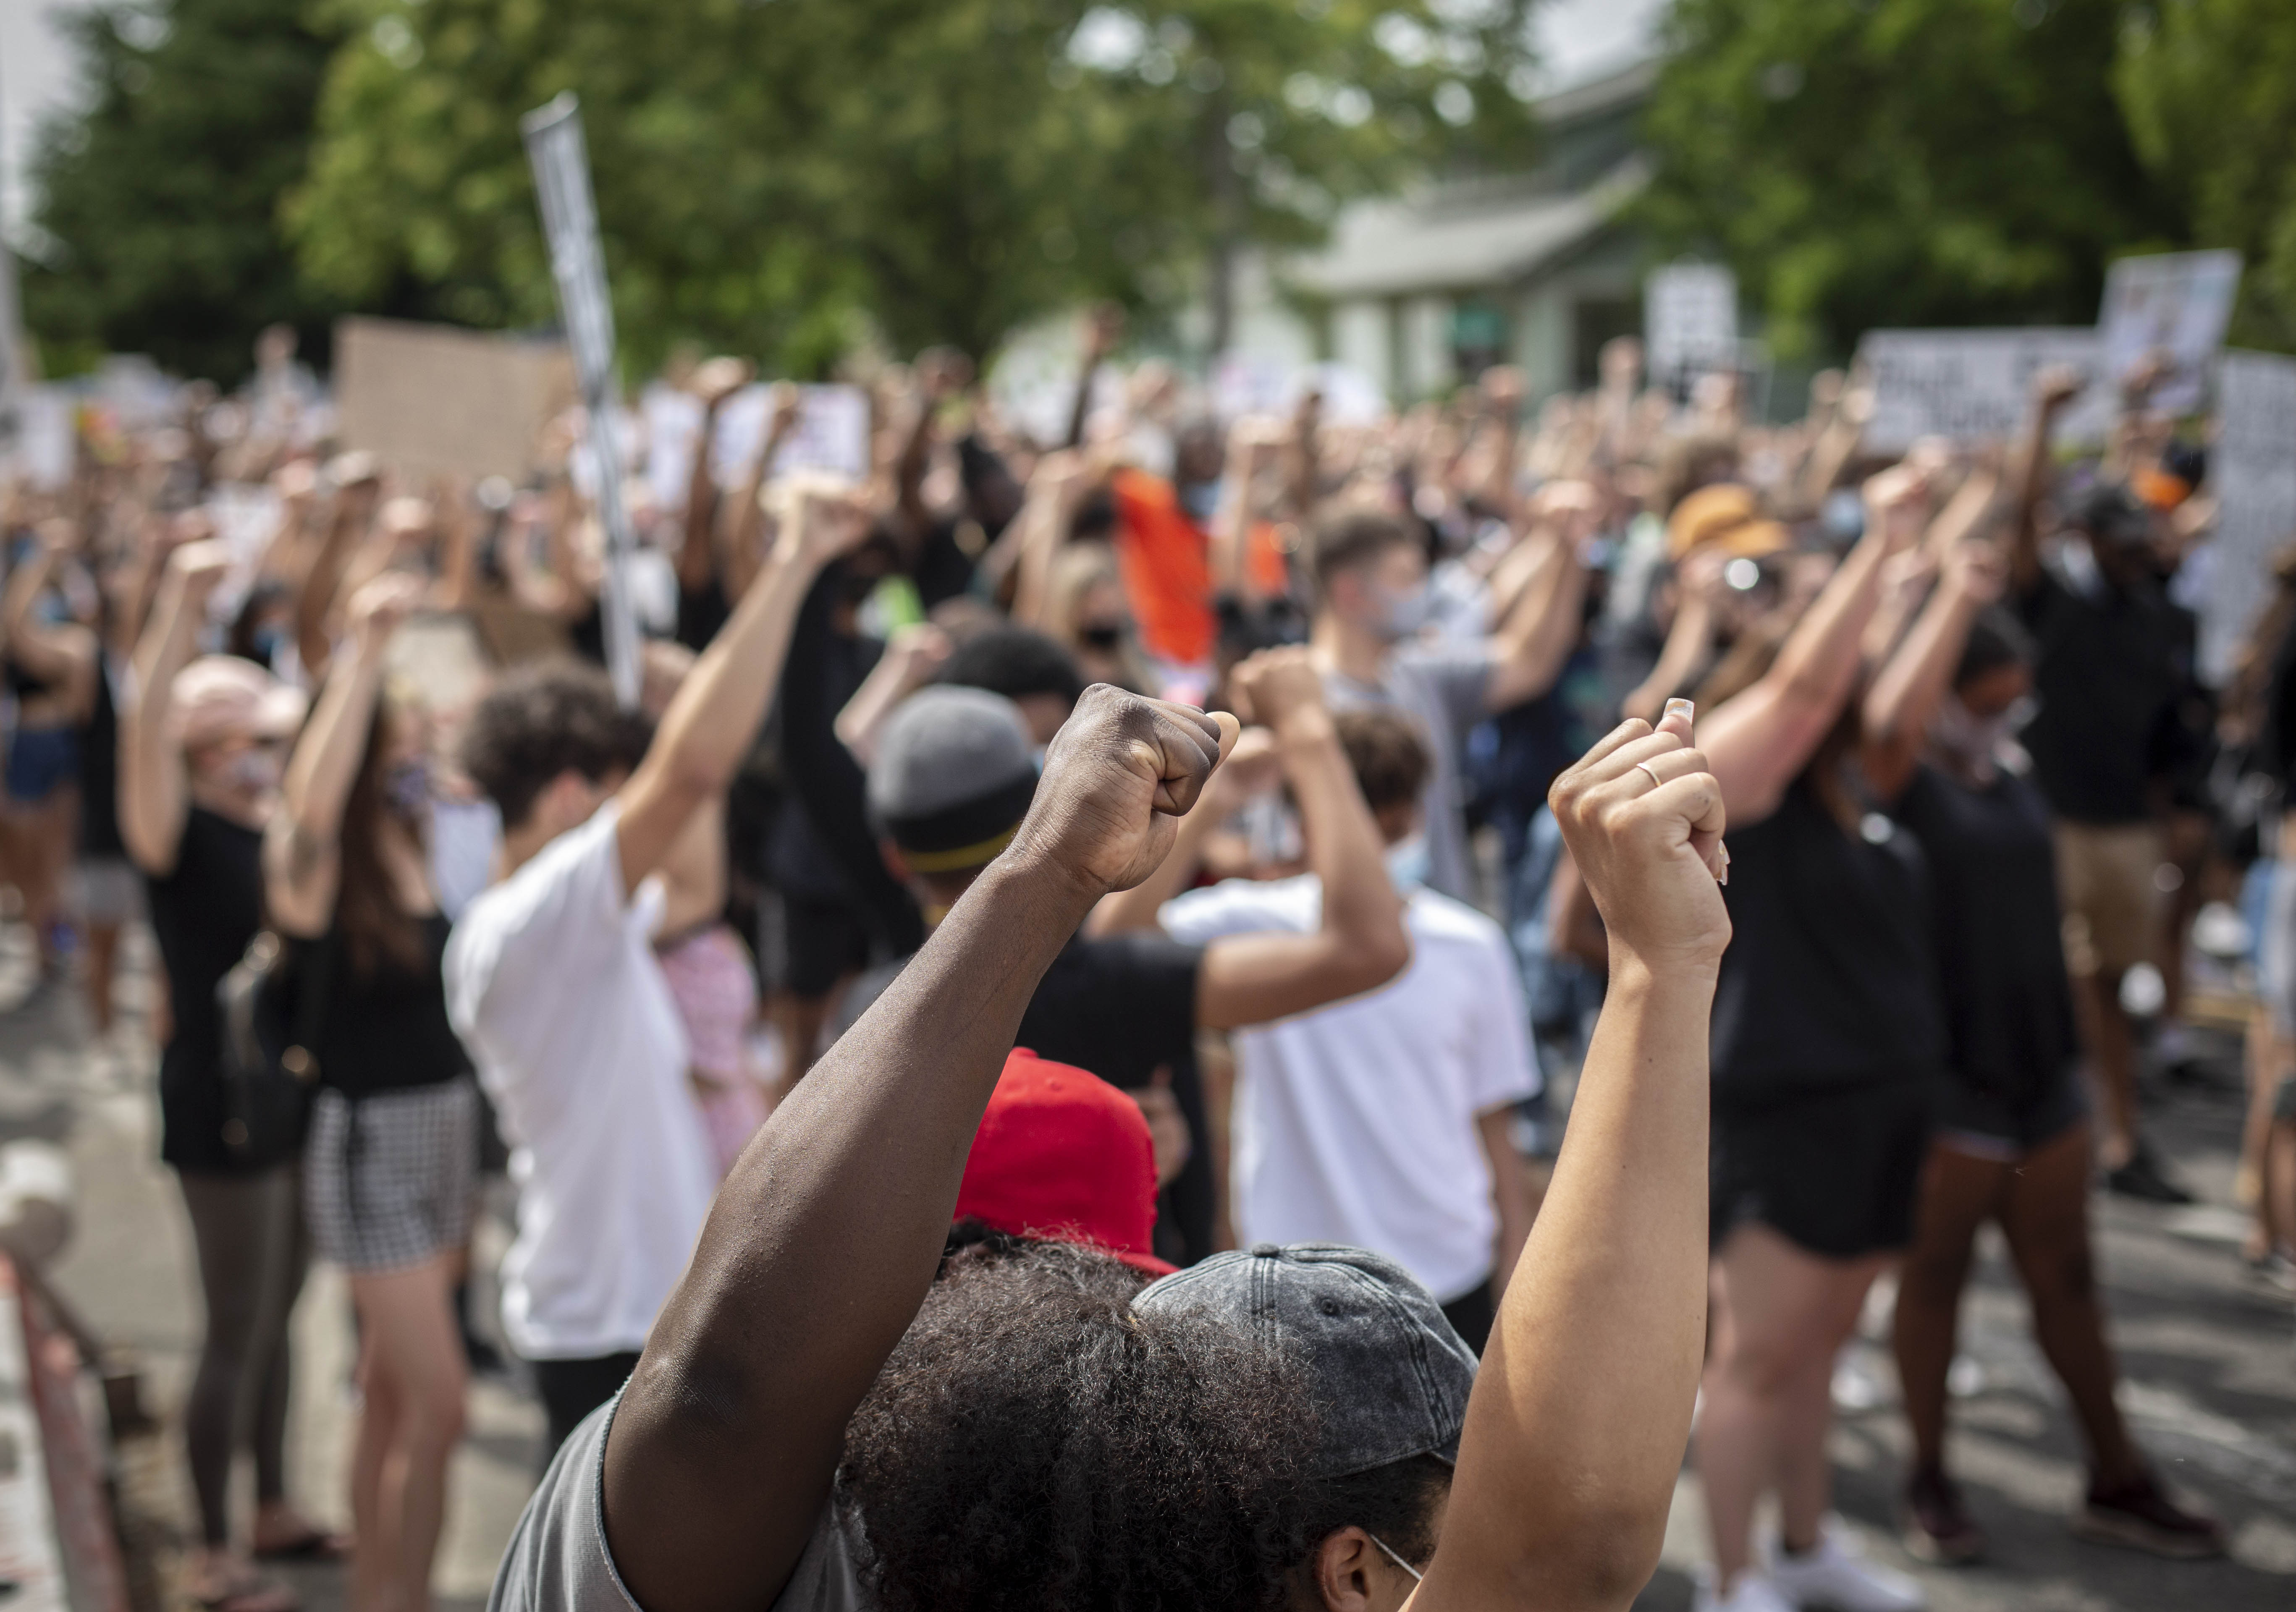 School celebrates Black Lives Matter - every day